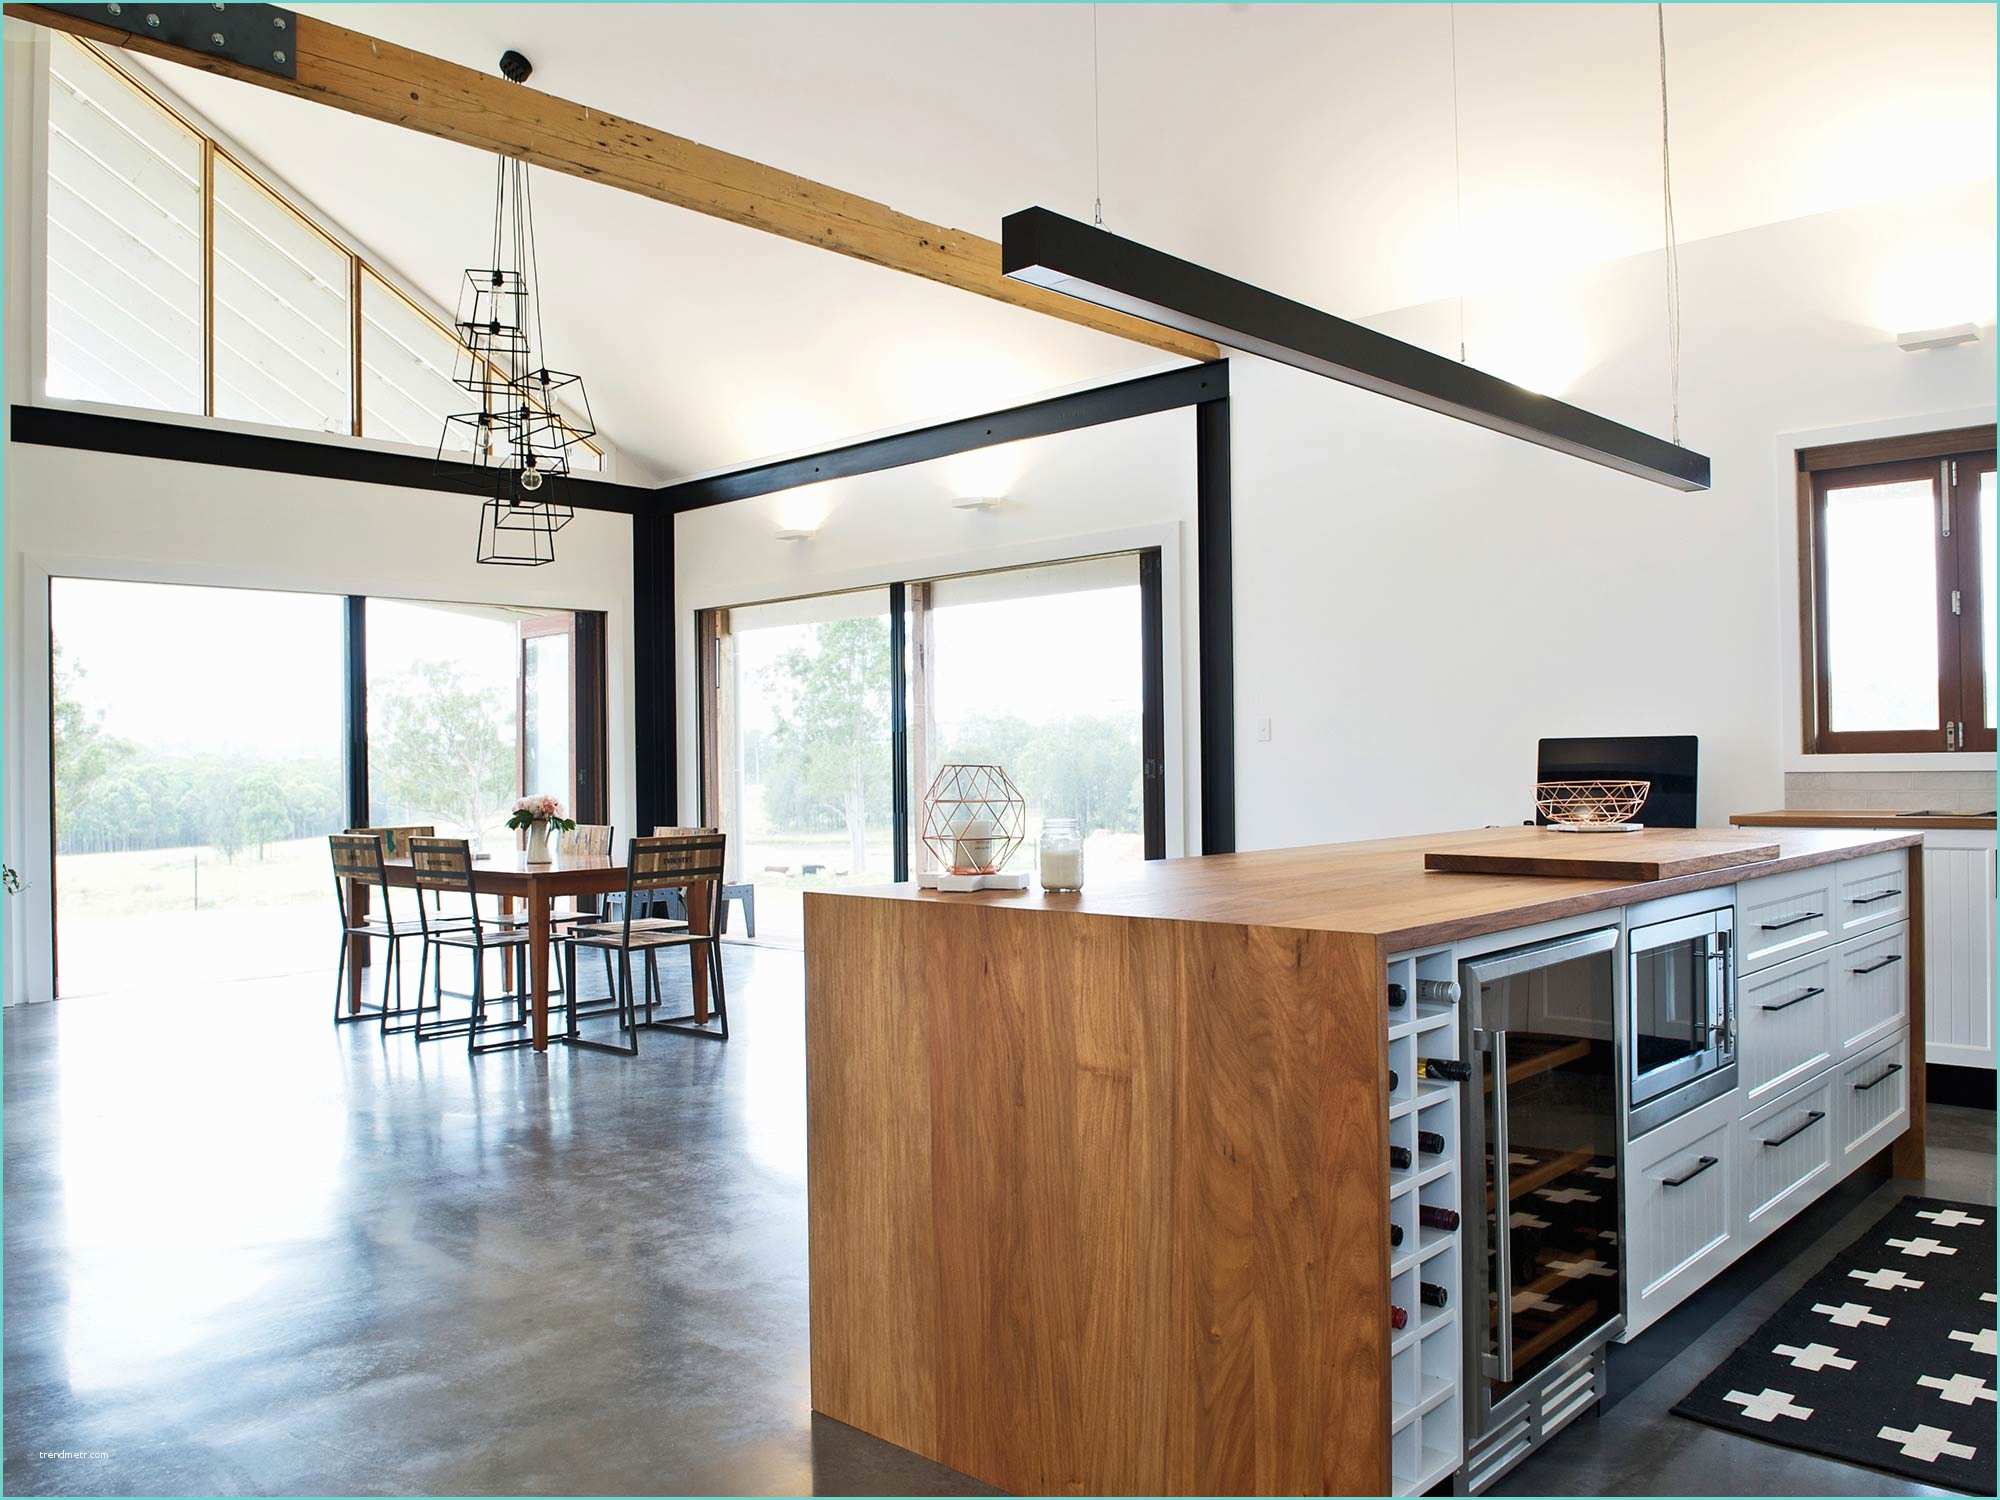 Kitchen Pop Design Plus Minus Plus Minus Pop Designs for Your Ceiling – Realestate